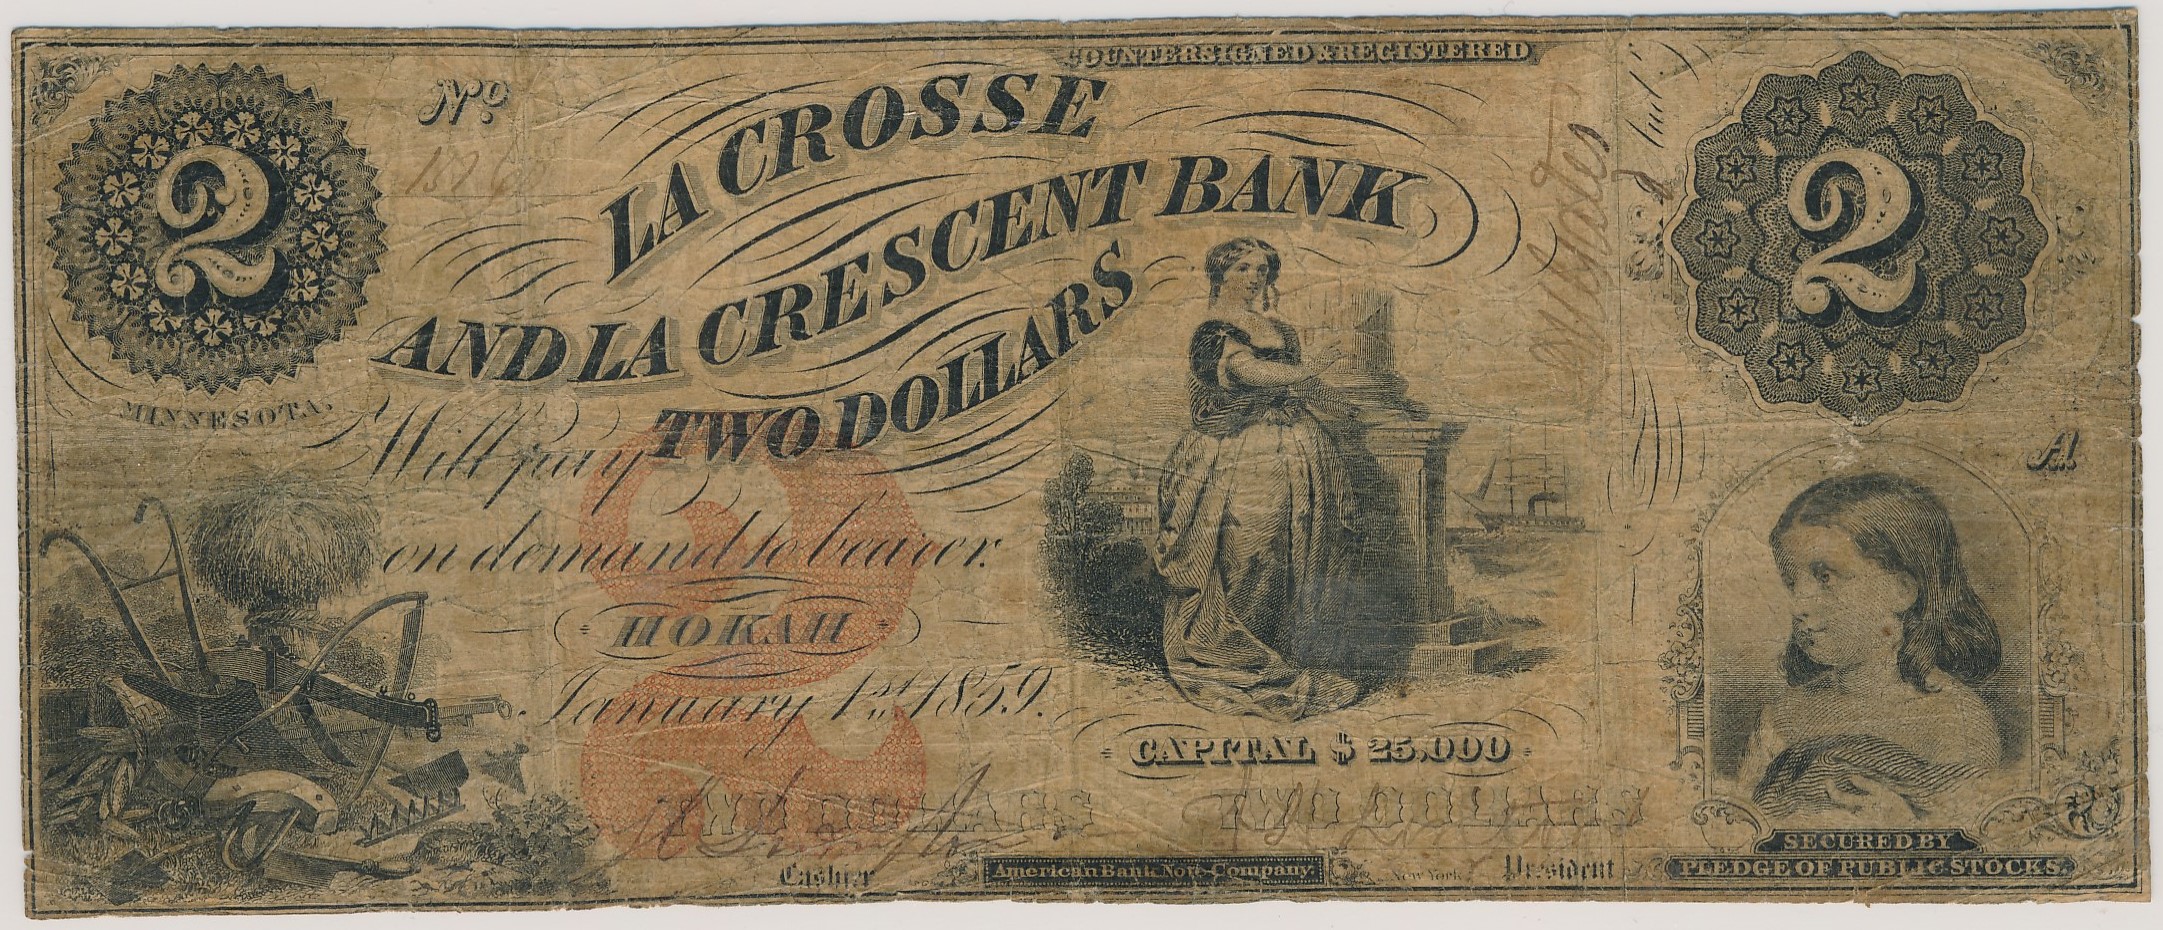 La Crosse and La Crescent Bank